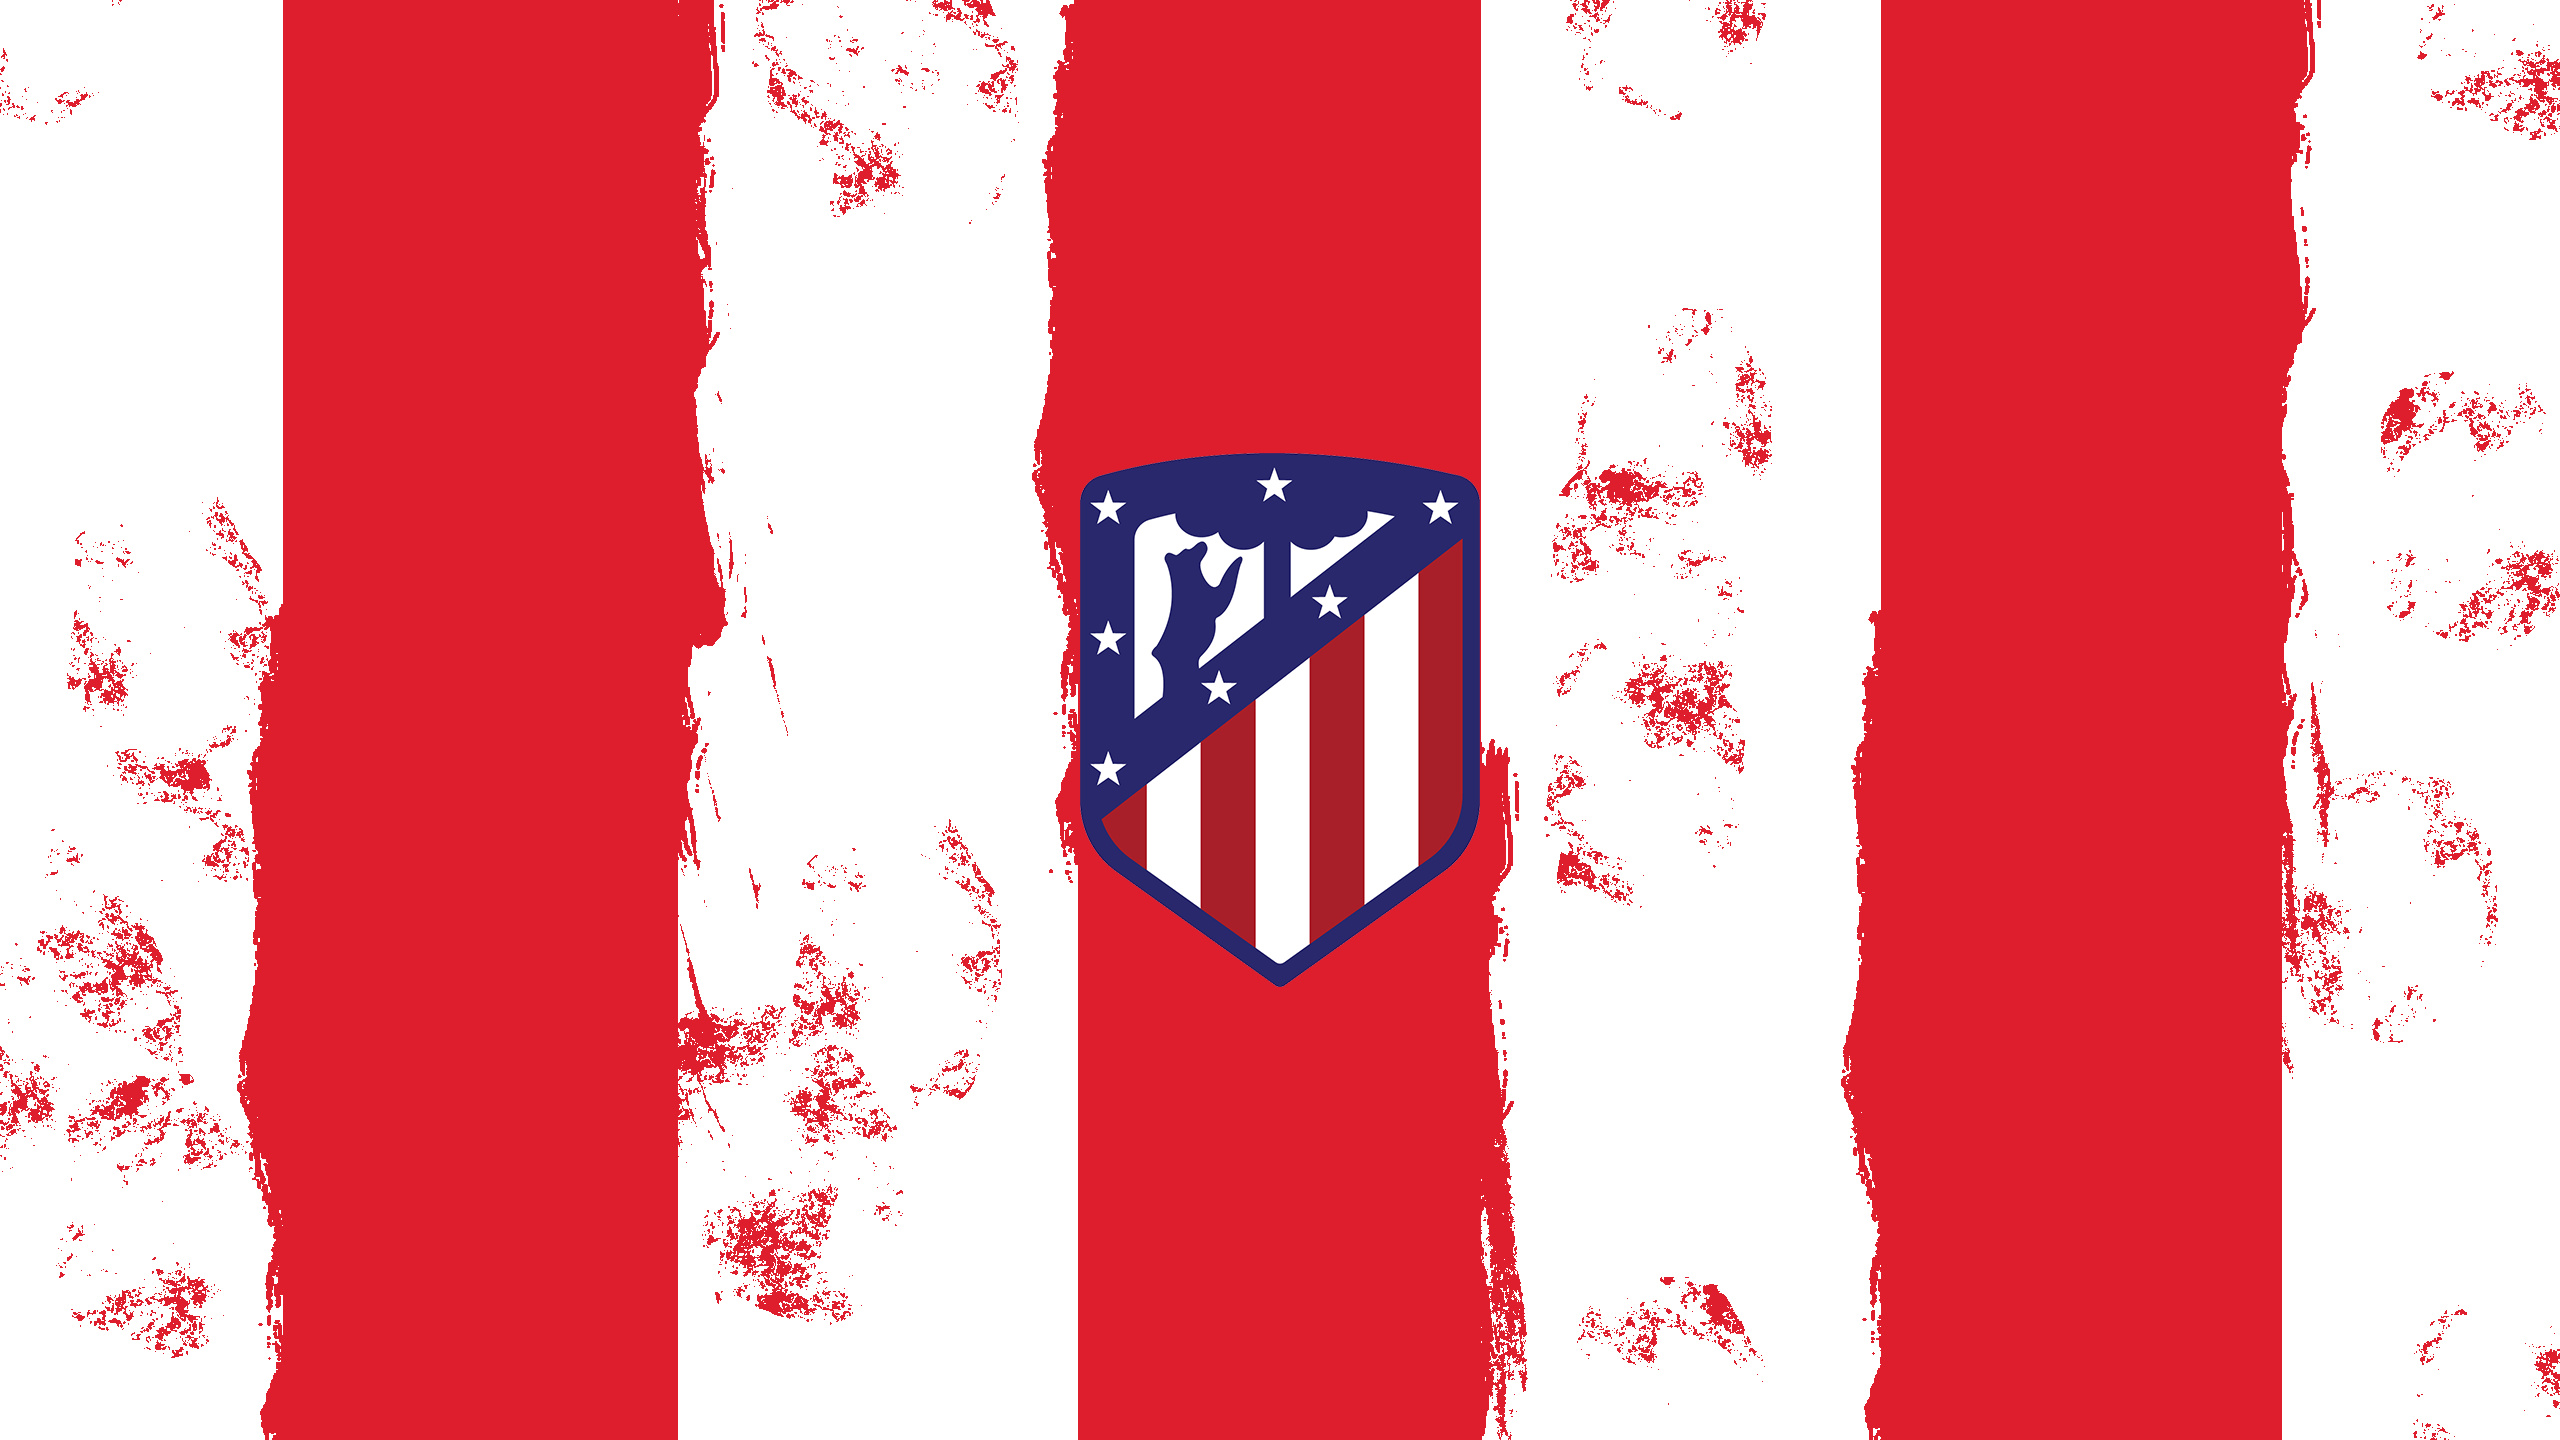 Atletico Madrid: A Spanish professional football club that plays in La Liga. 2560x1440 HD Wallpaper.